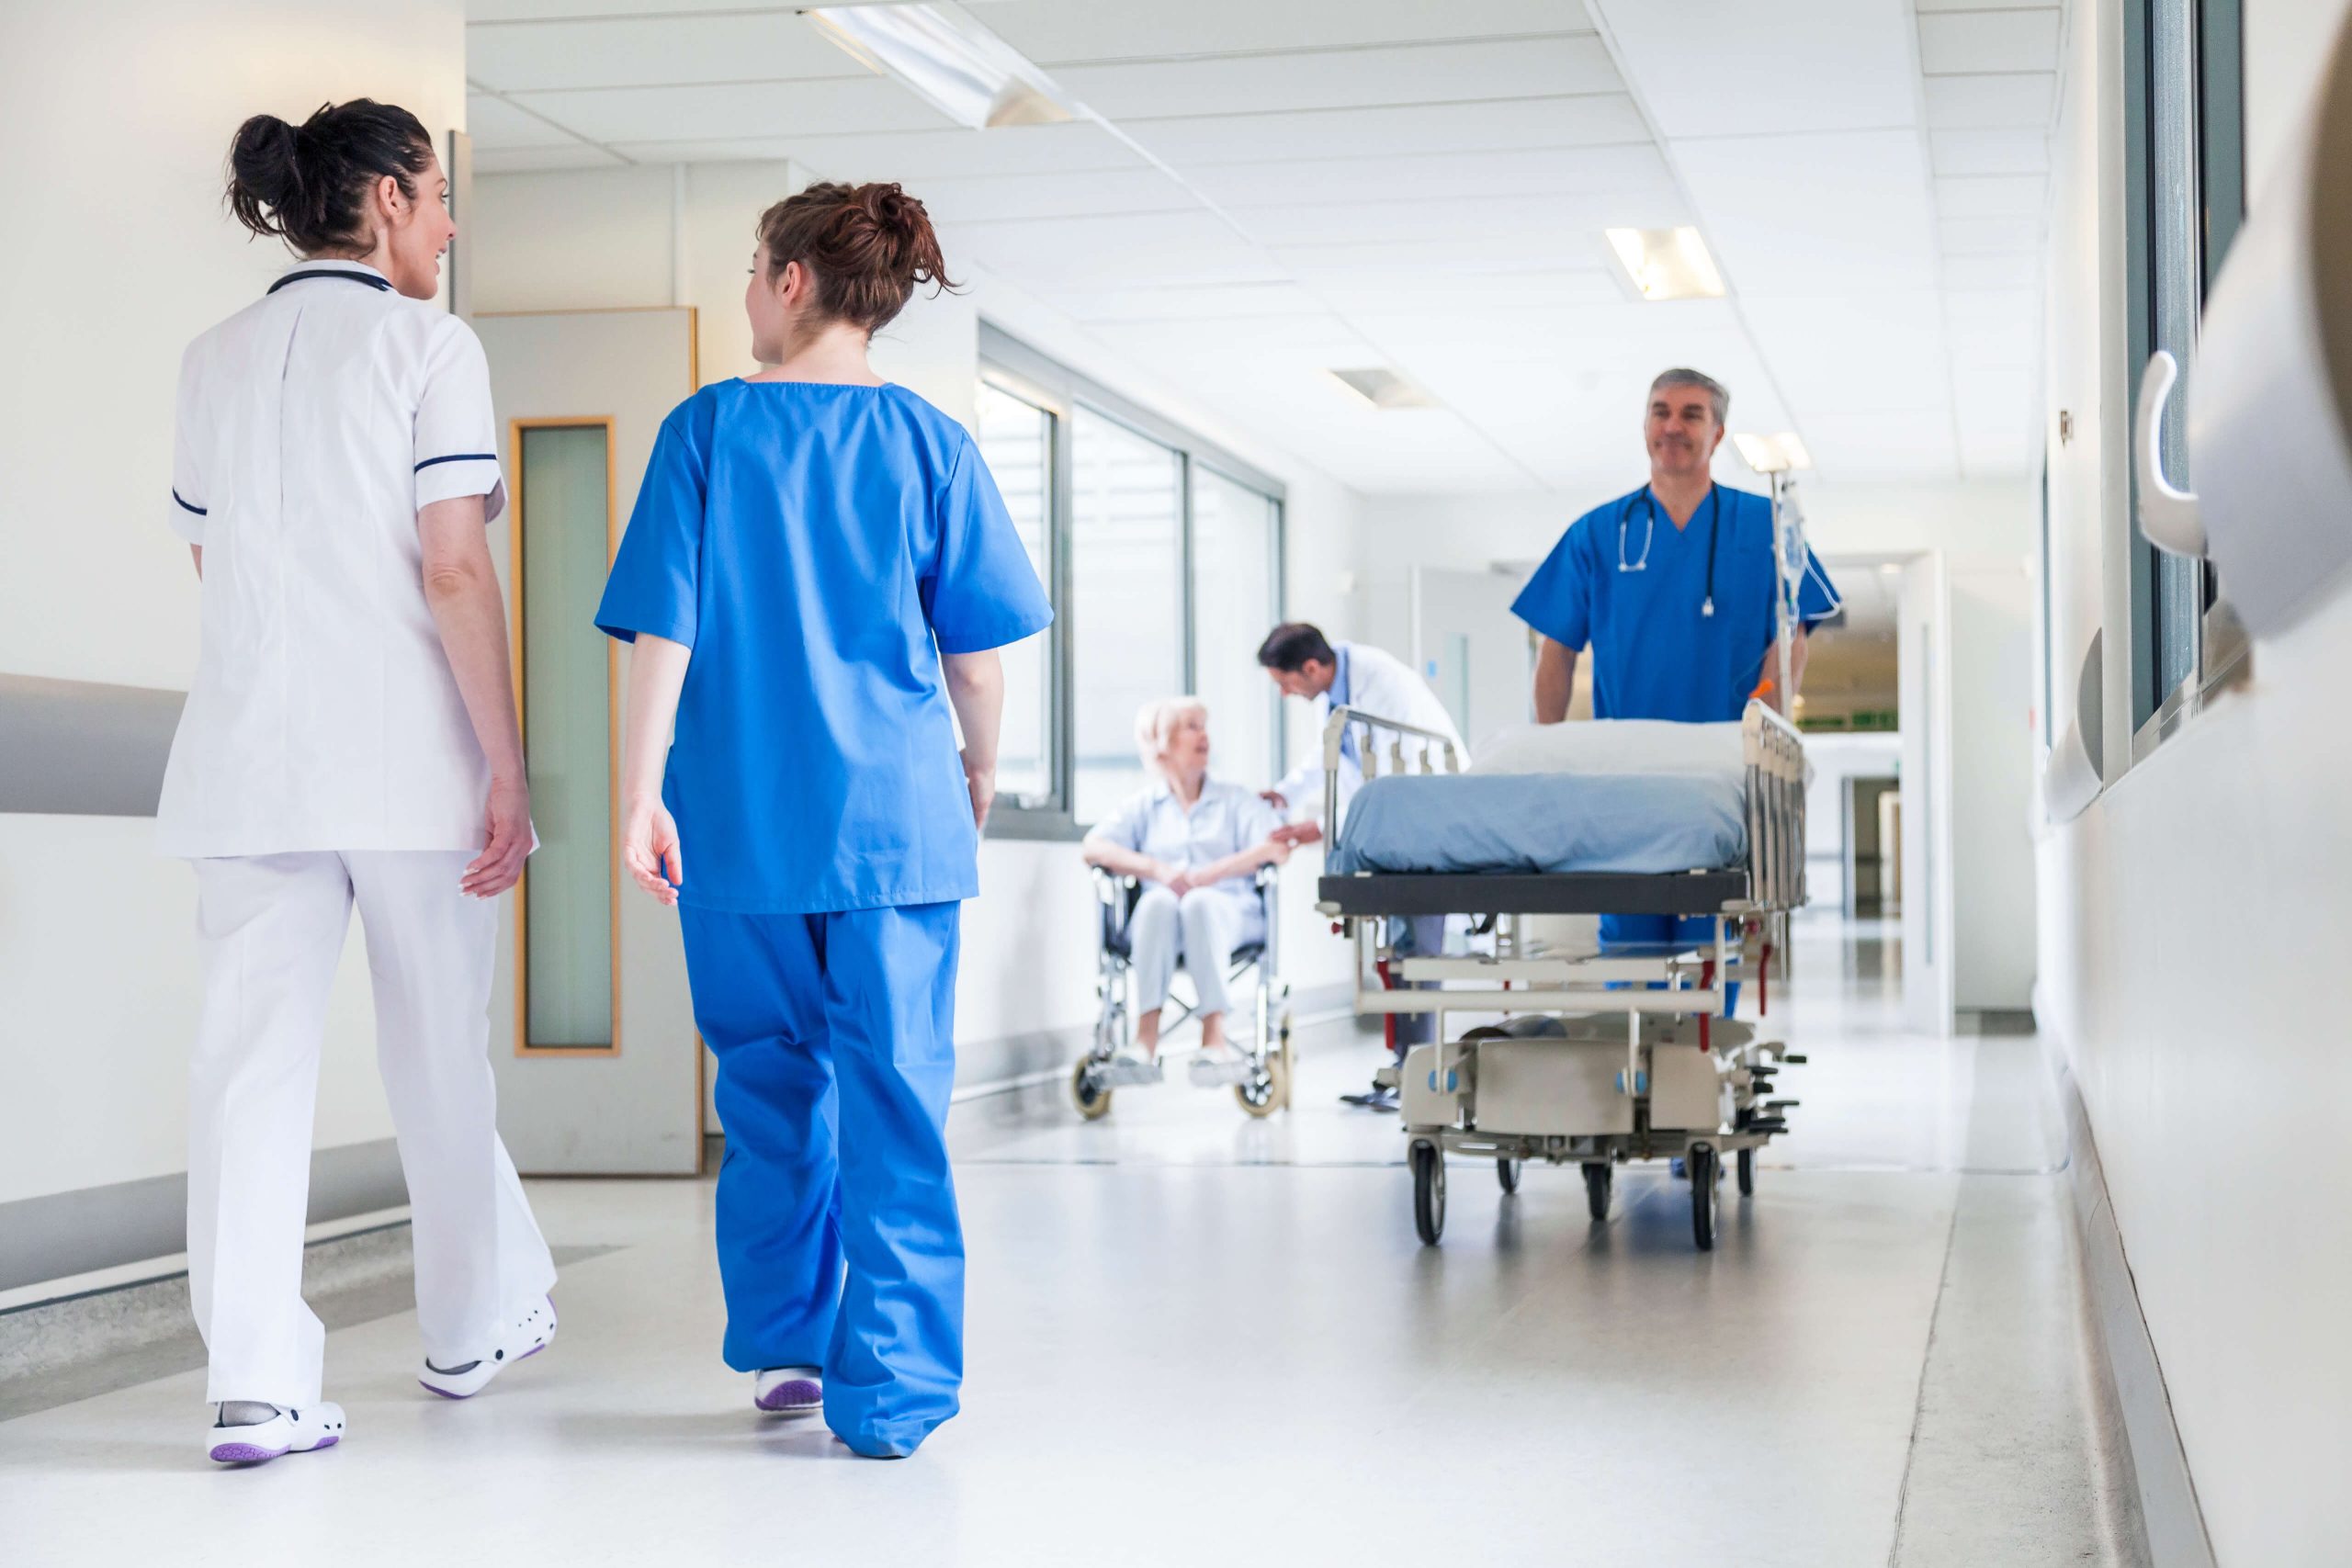 nurses walking down a hospital hallway talking to each other